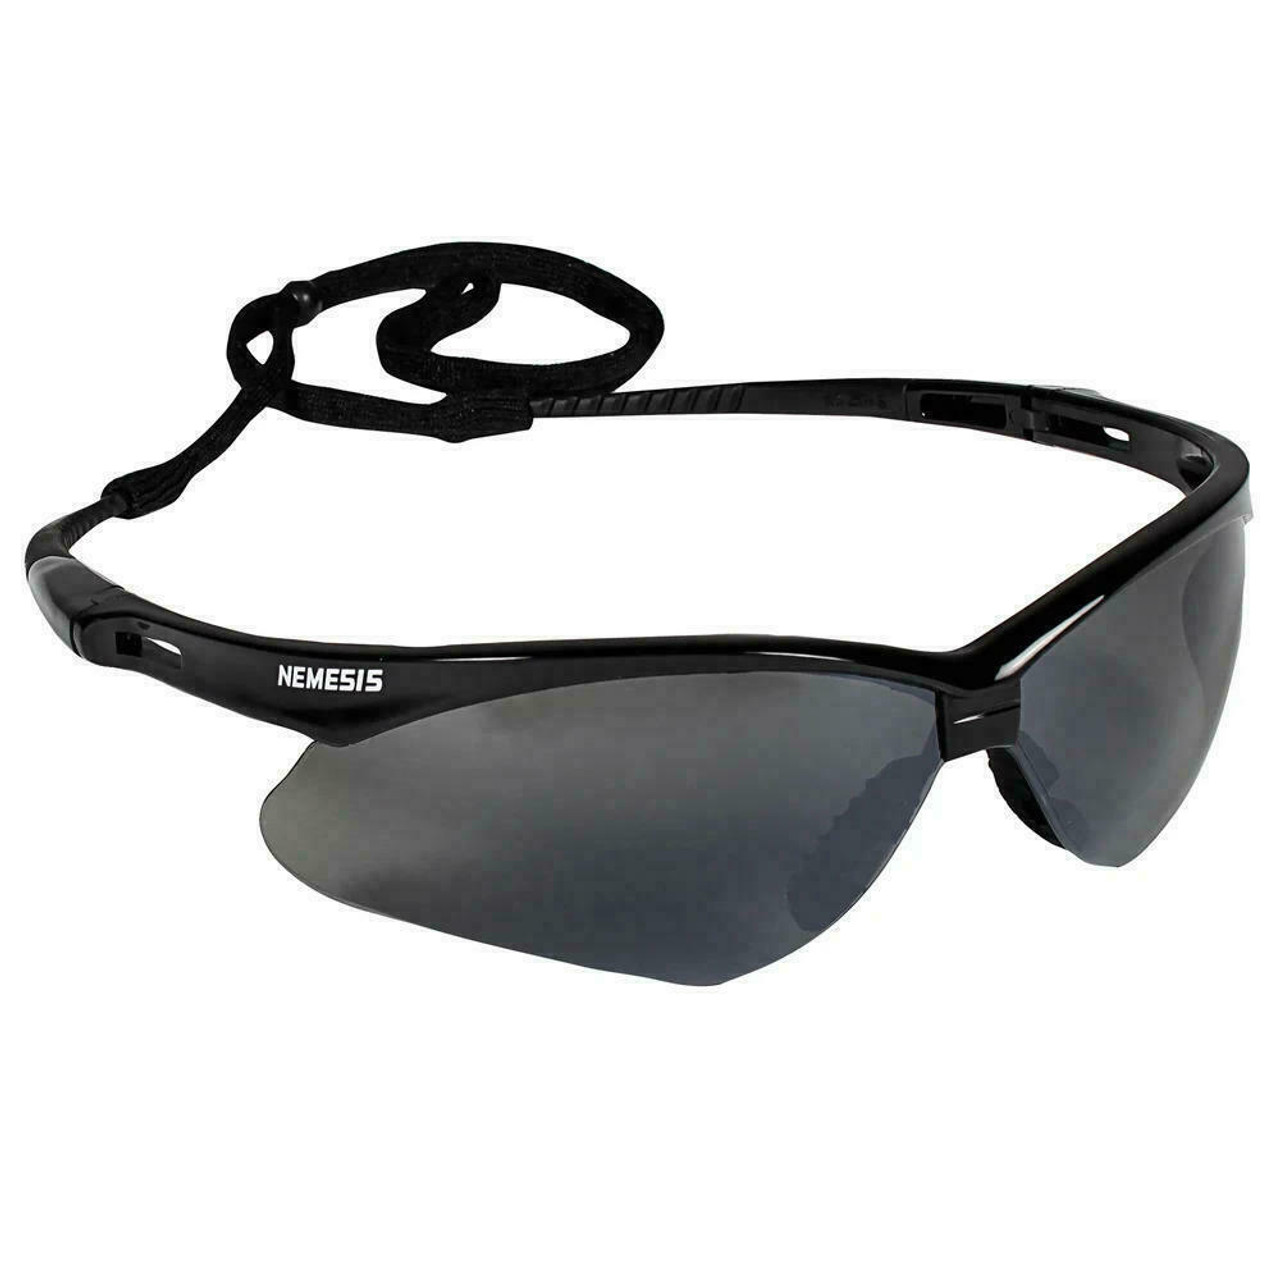 Nemesis Safety Glasses 25688 - Smoke Mirror Lens - Blk Frame 